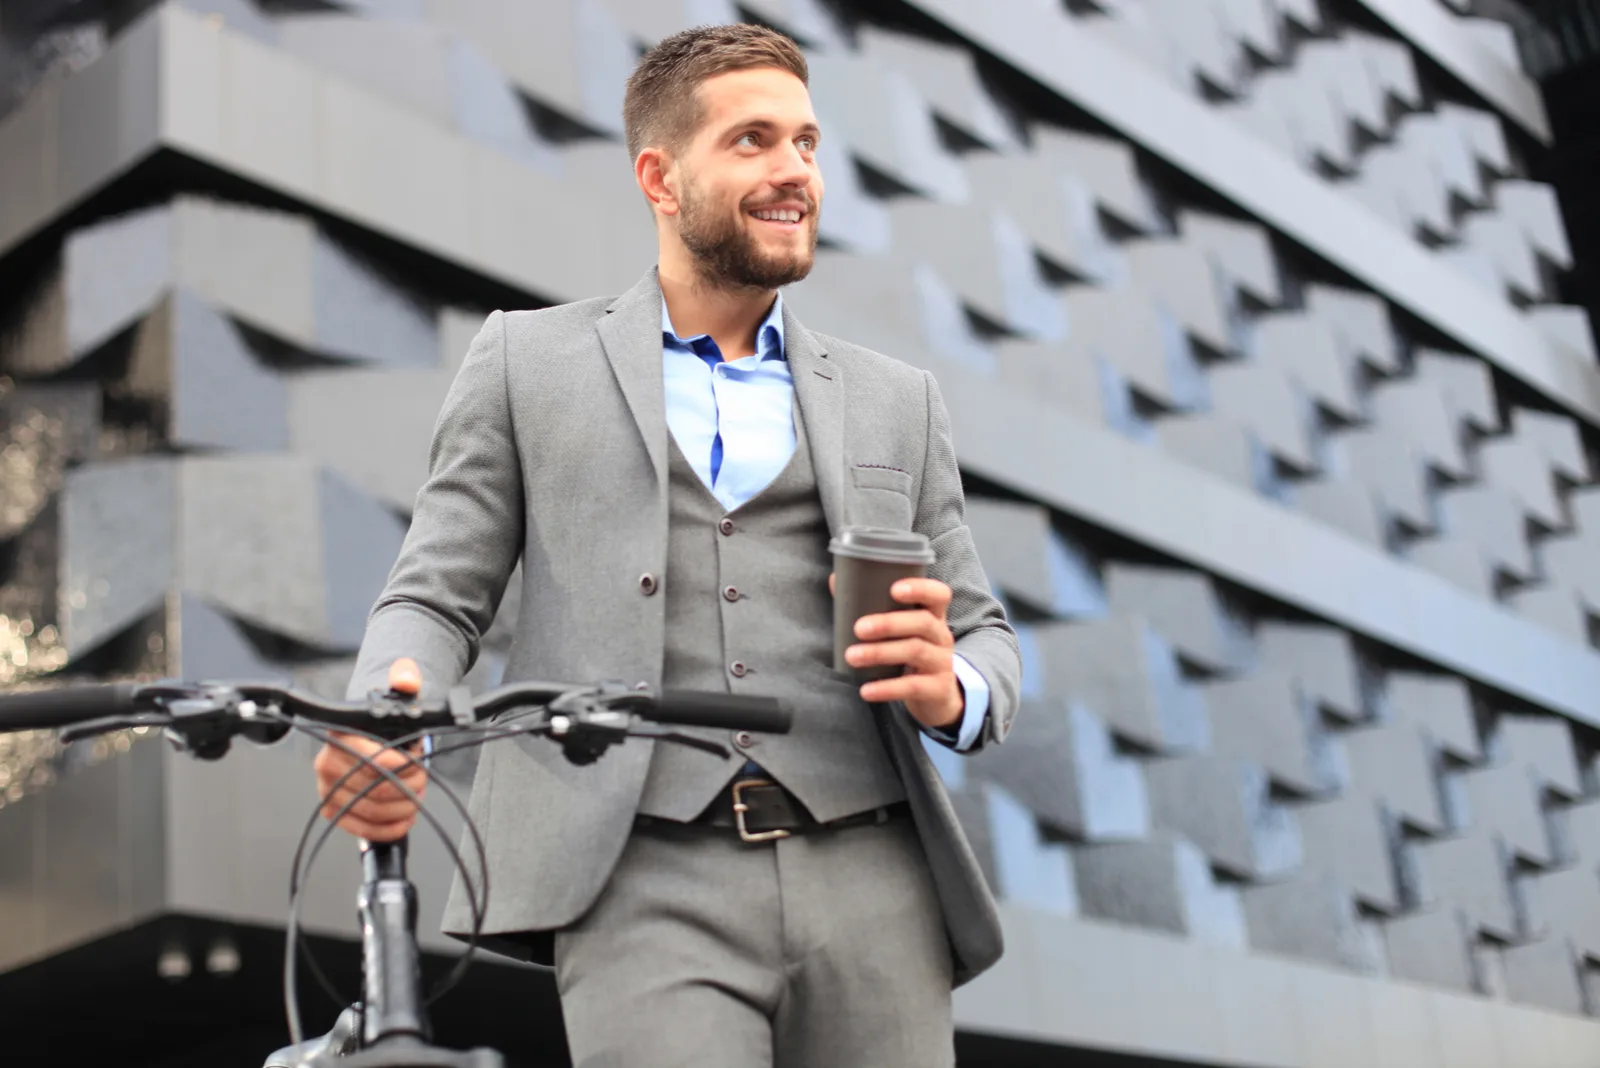 Mann im Anzug mit Fahrrad mit Kaffee